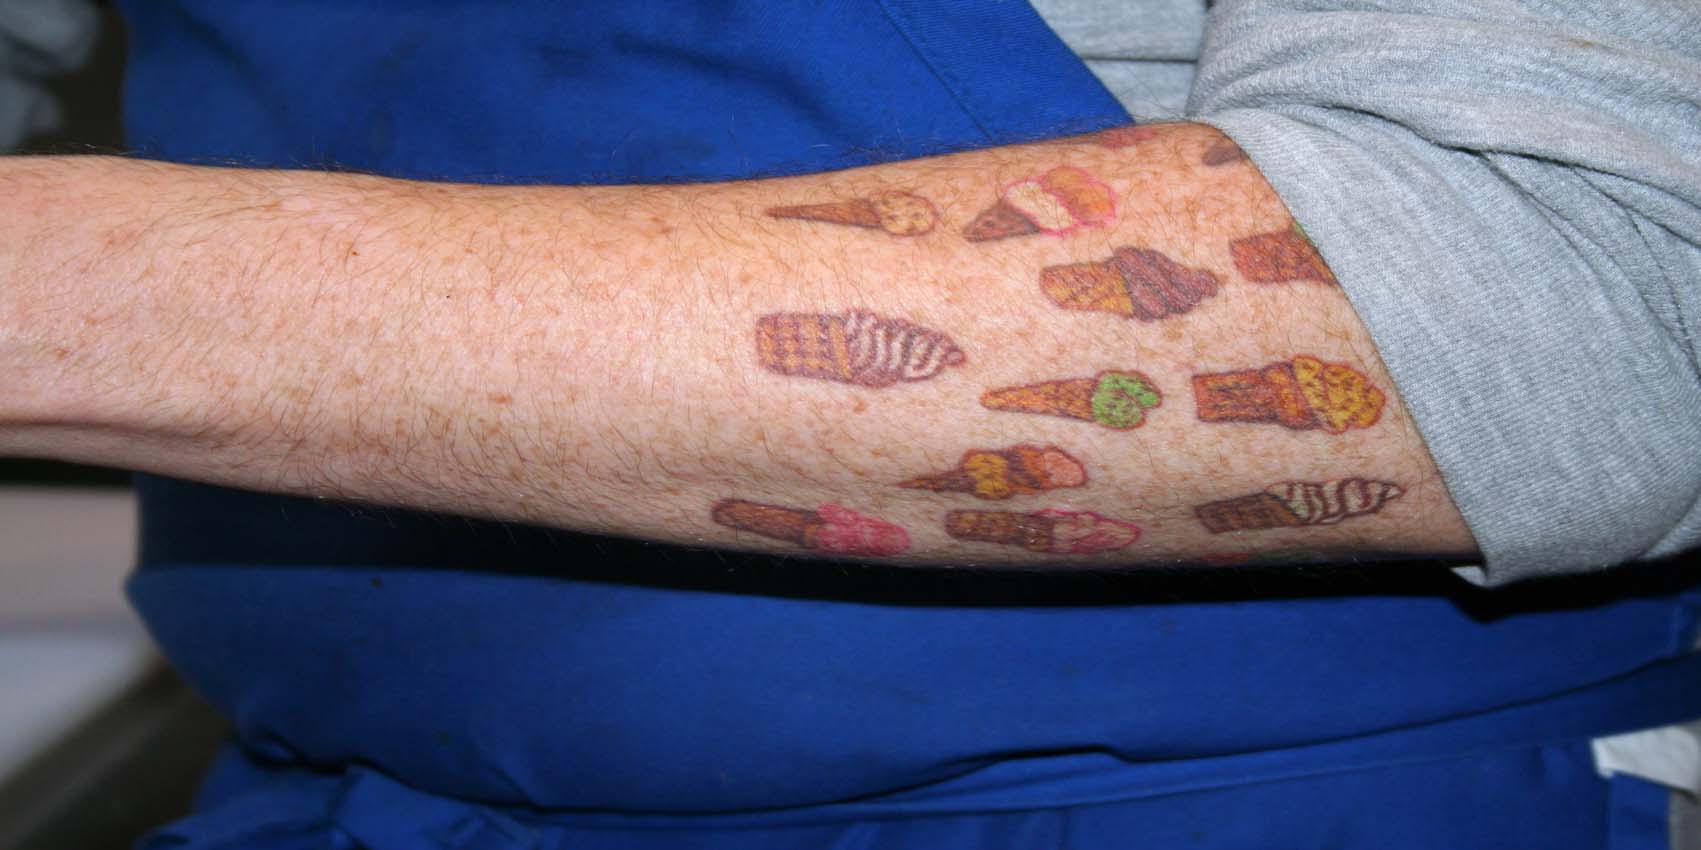 Small Ice Cream Cones Tattoo On Arm Sleeve